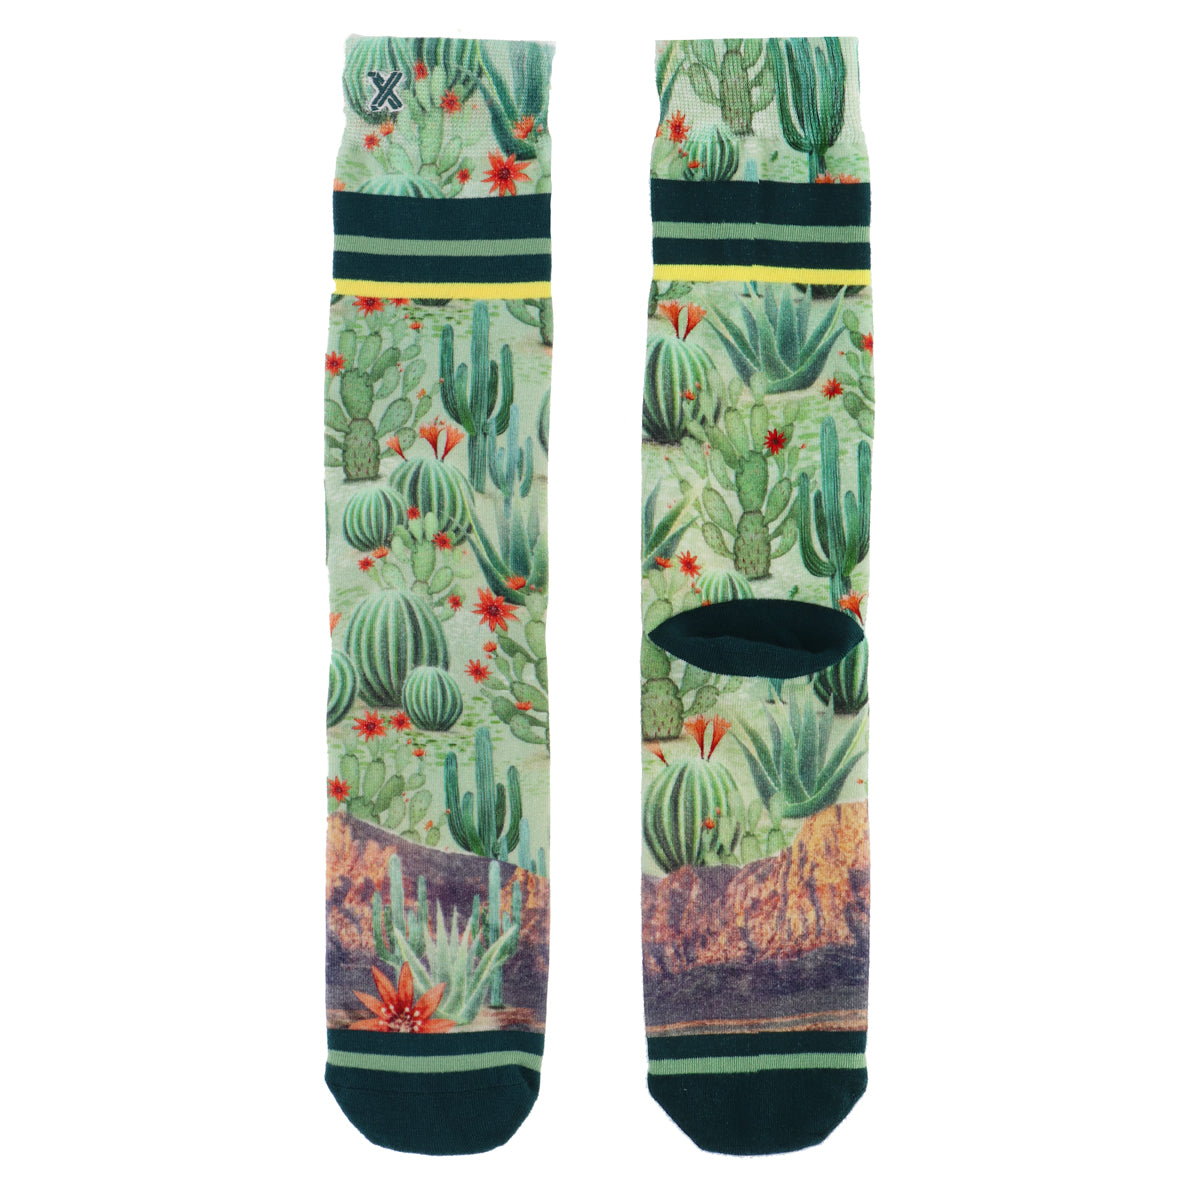 Xpooos & ADNF Cactus Bamboo men's socks